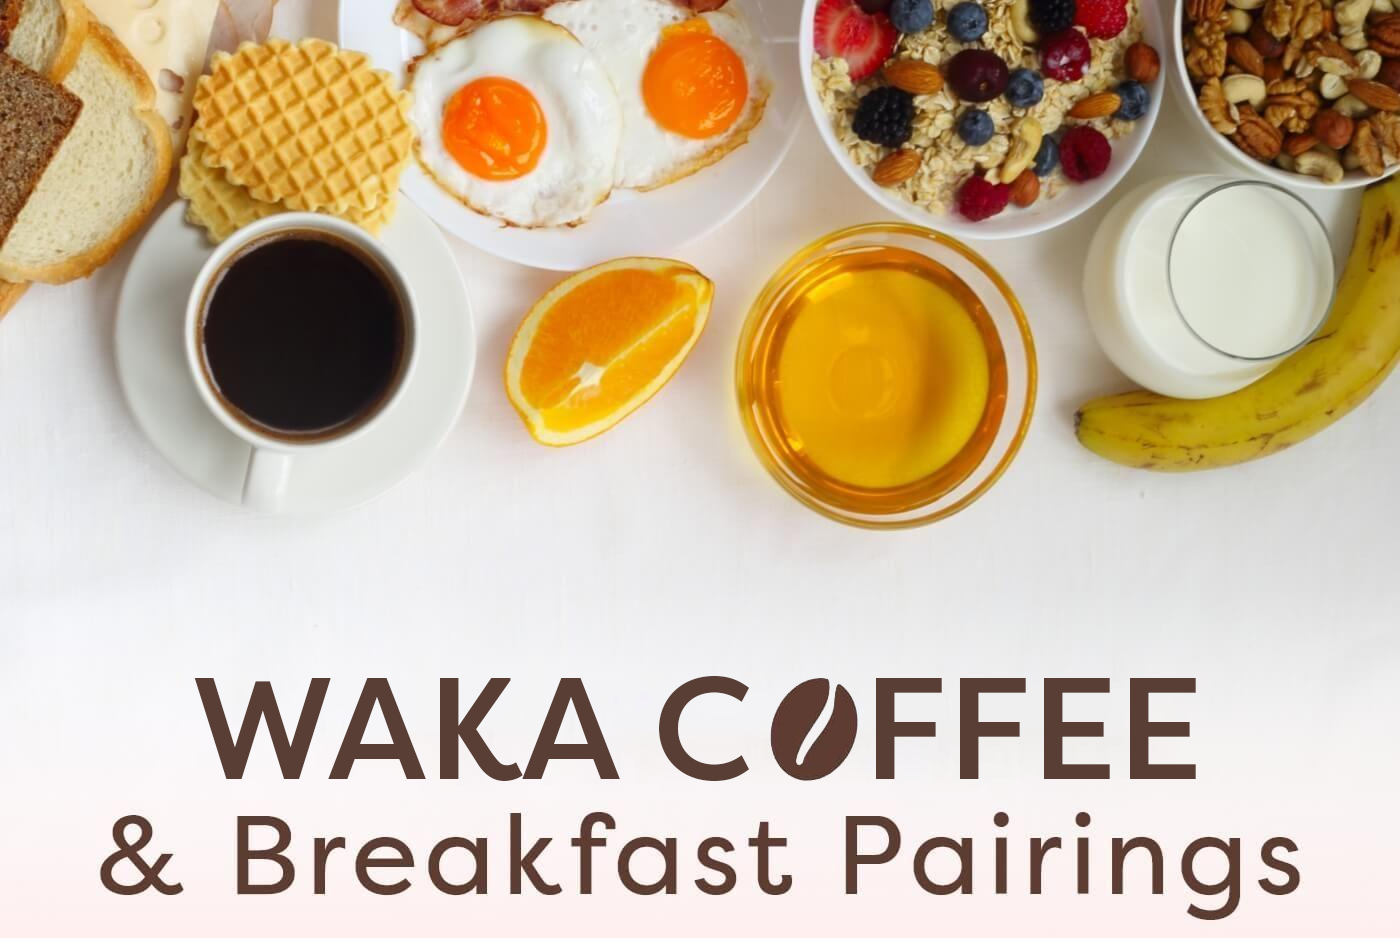 Waka Coffee & Breakfast Pairings